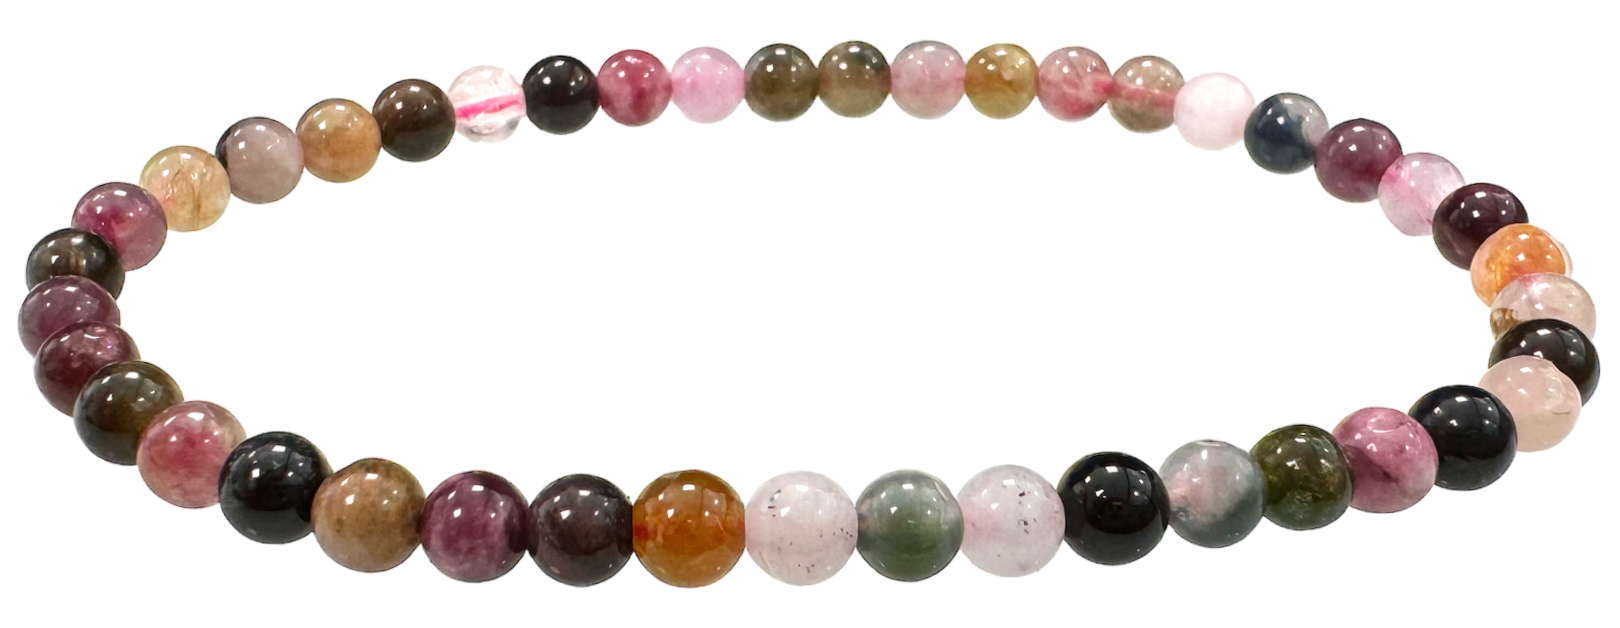 Bracelet Tourmaline Multicolore A perles 4mm